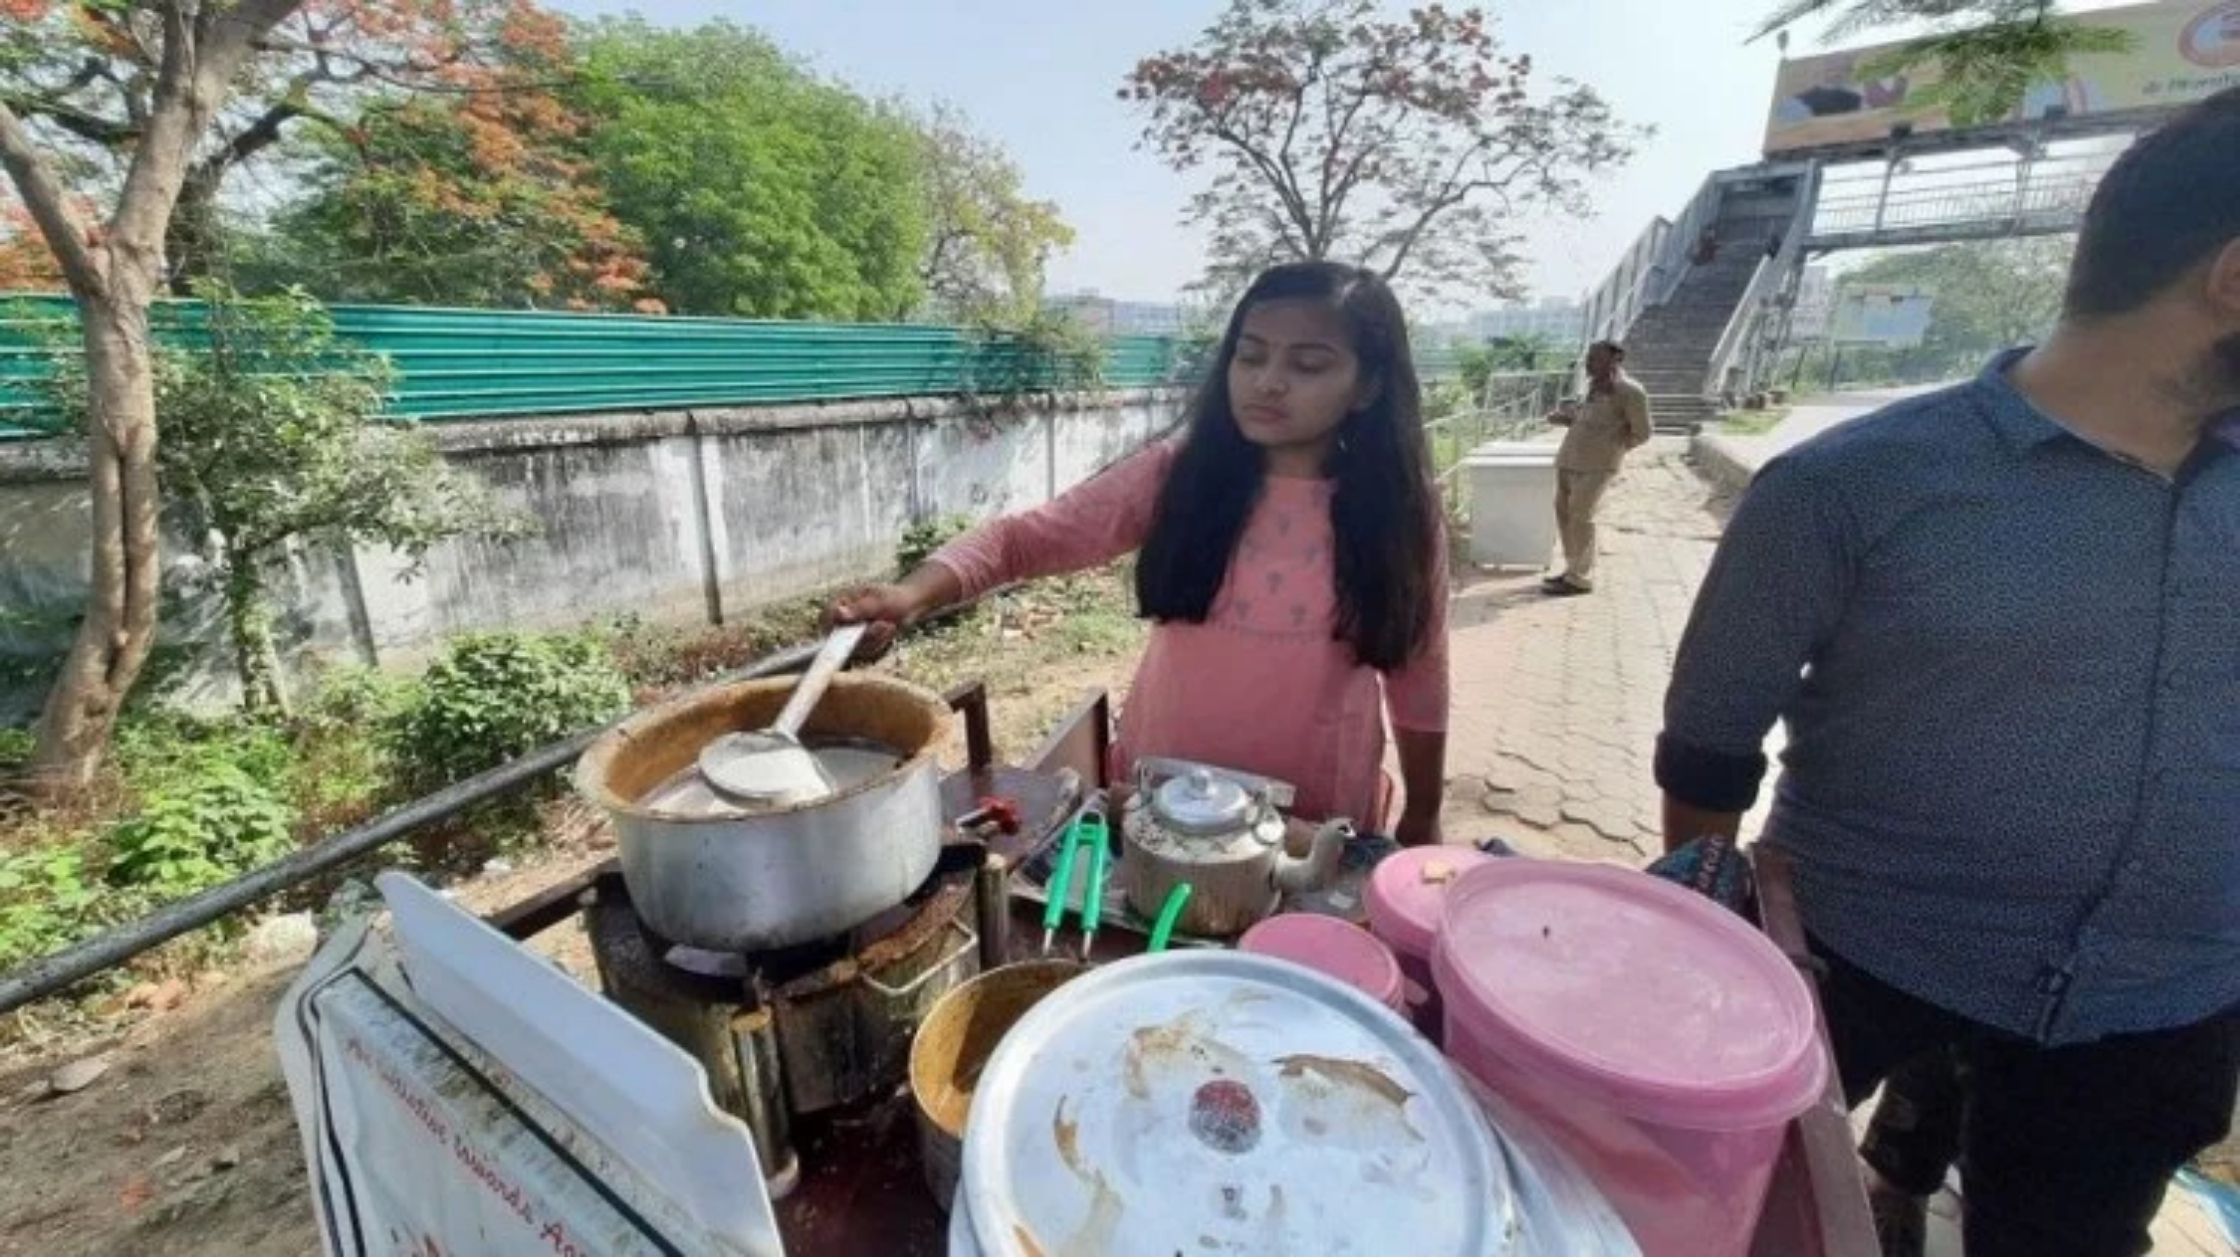 Bihar Graduate Chai Wali Priyanka is closing her stall